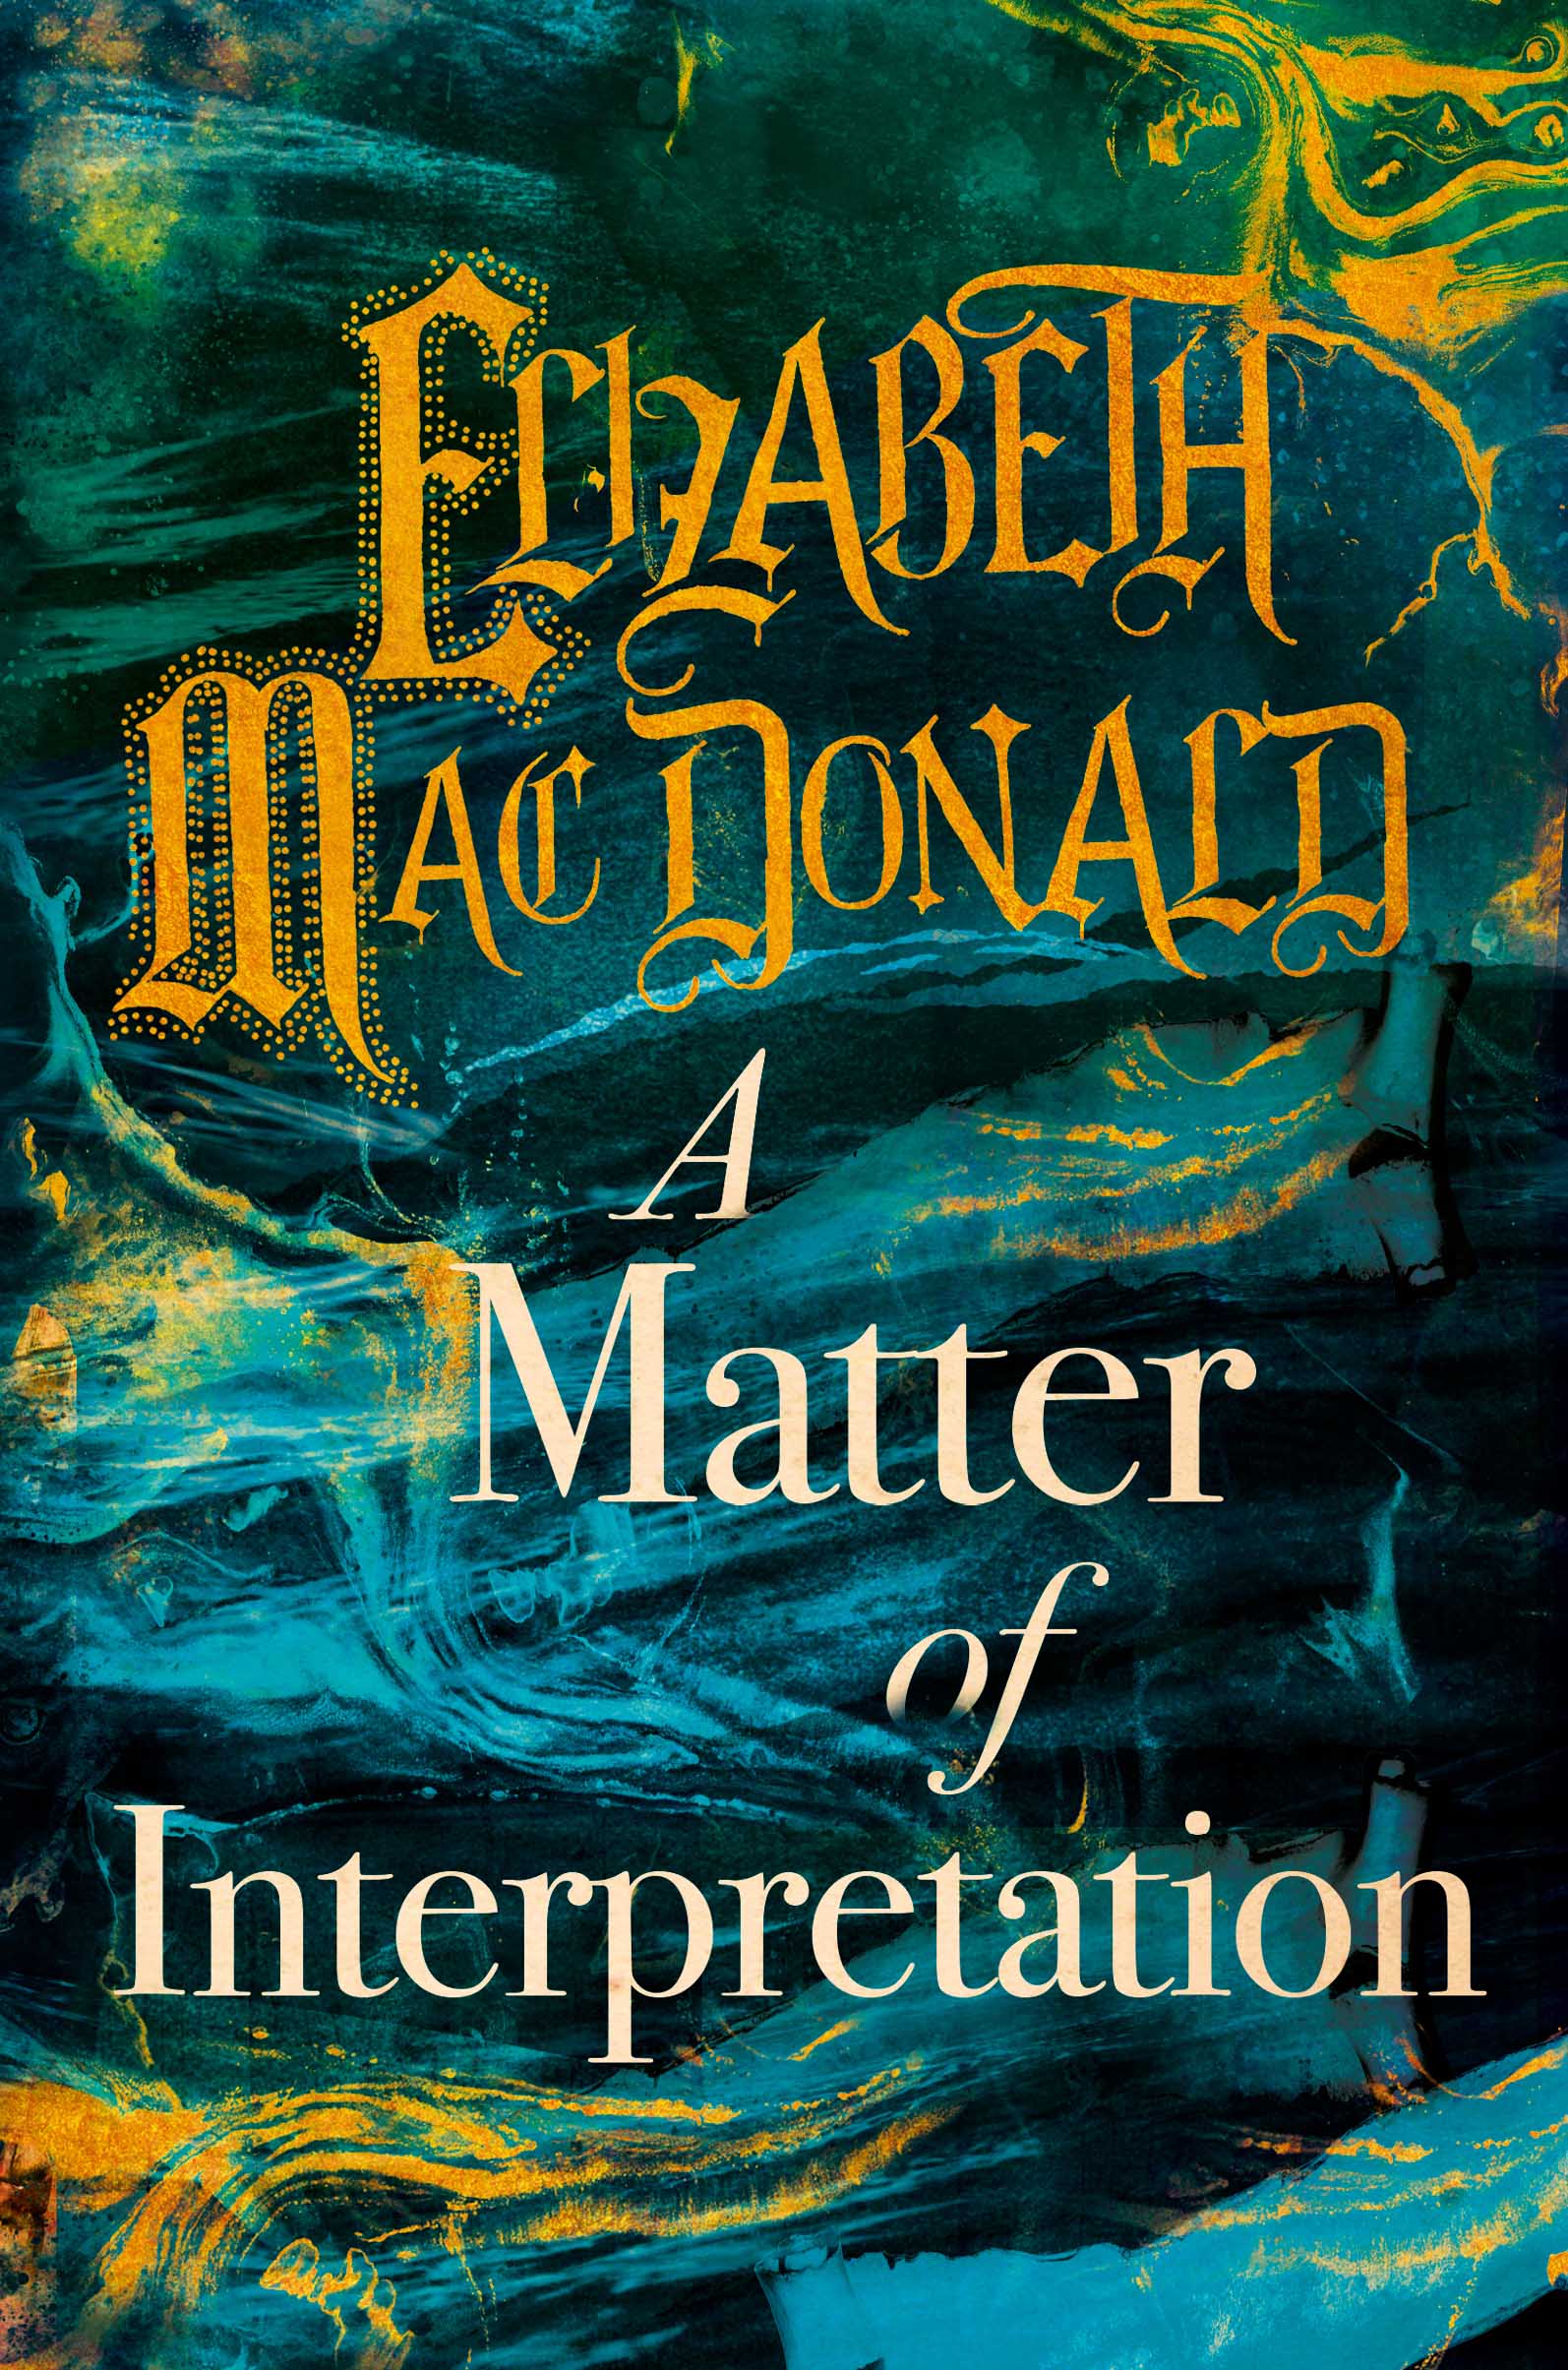 A Matter of Interpretation by Elizabeth Mac Donald